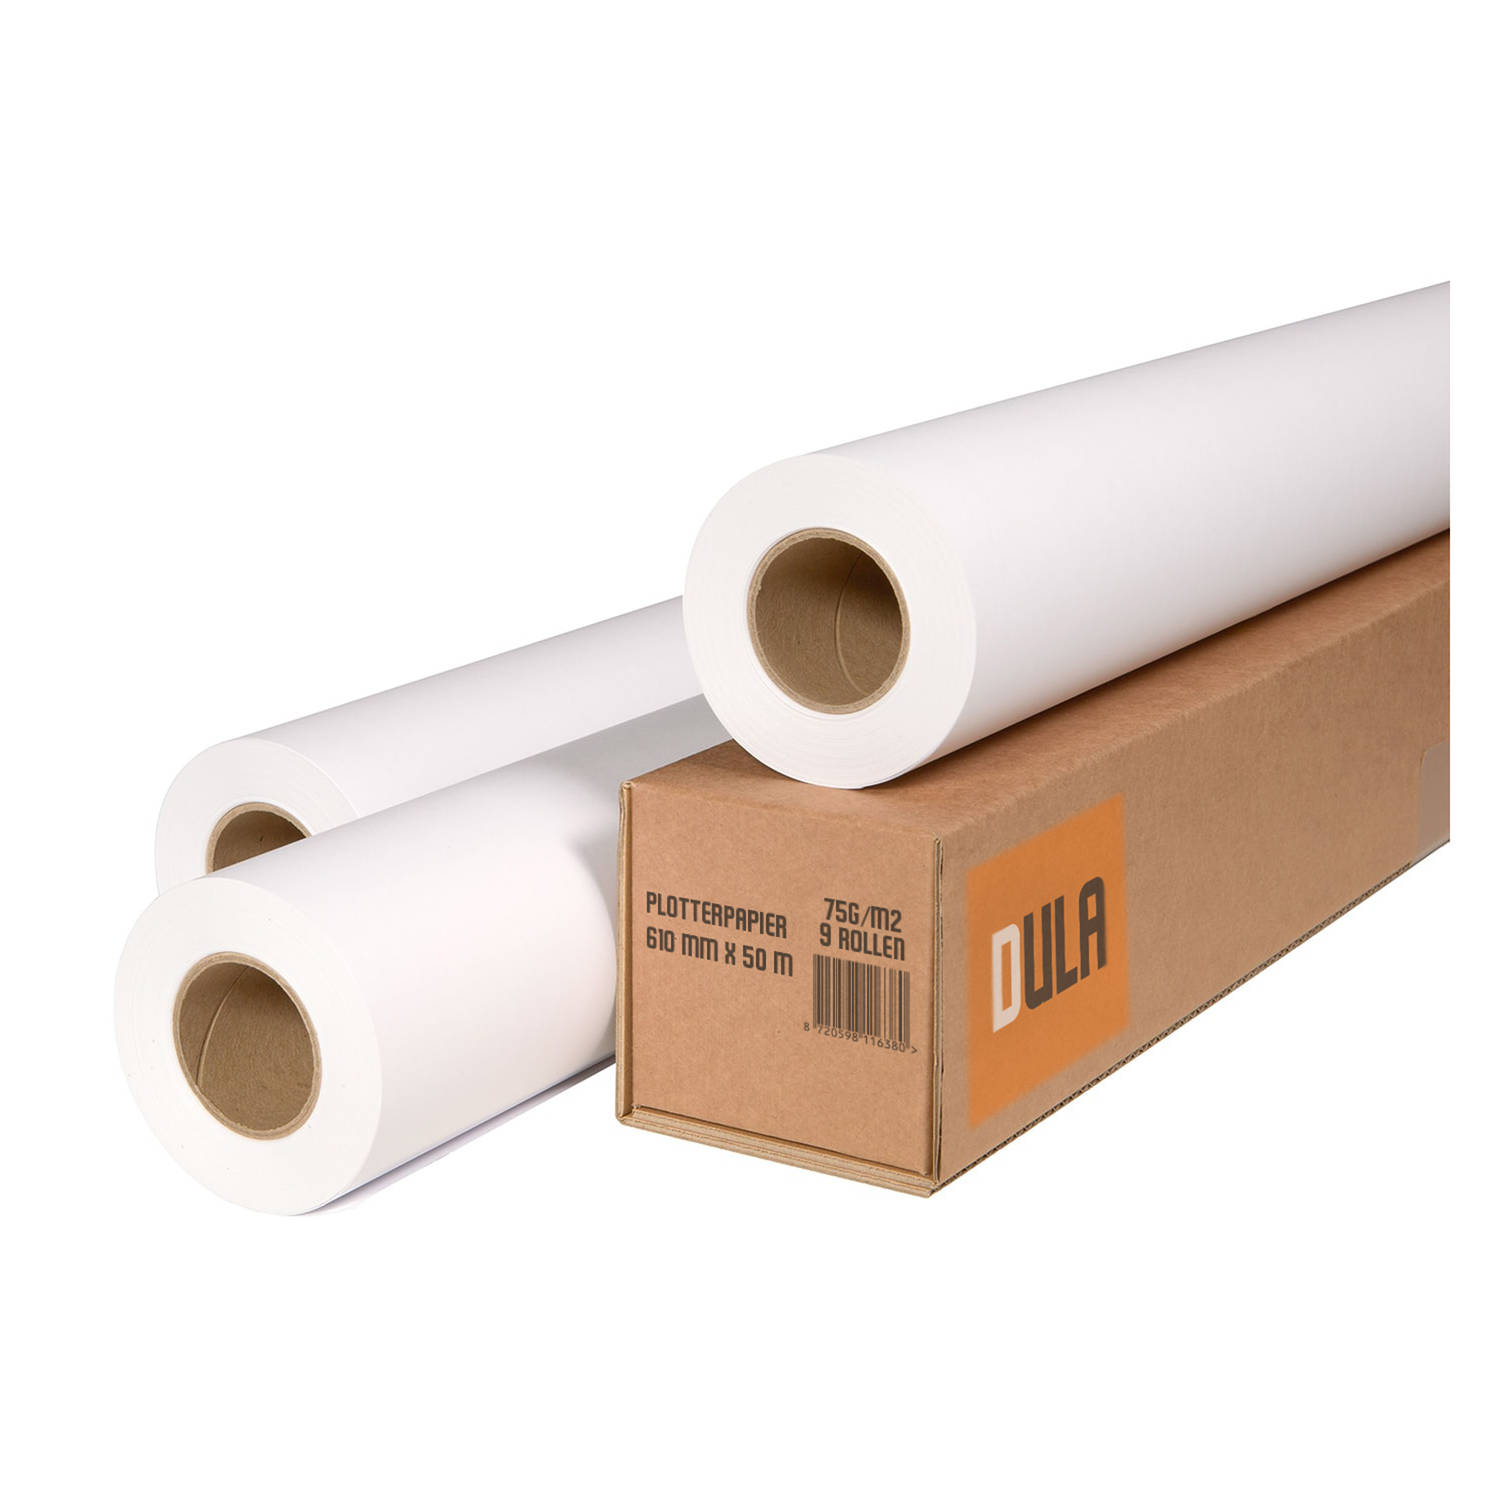 DULA - Plotterpapier - inkjetpapier - 610mm x 50m - 75 gram - 9 rollen - A1 oversize papier - 24 inch